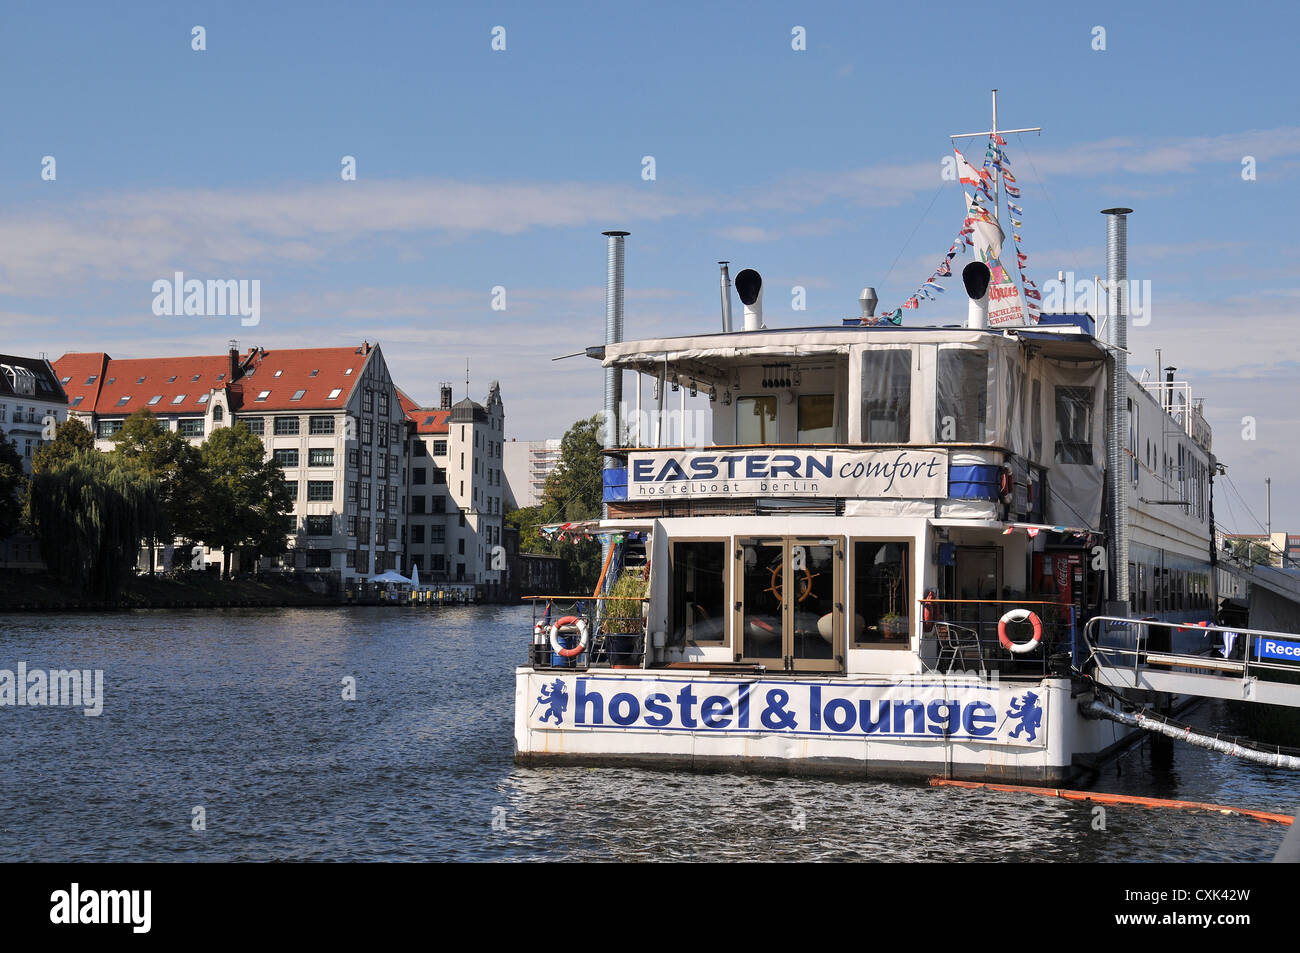 Eastern Comfort hostel boat on Spree river Berlin Germany Stock Photo -  Alamy